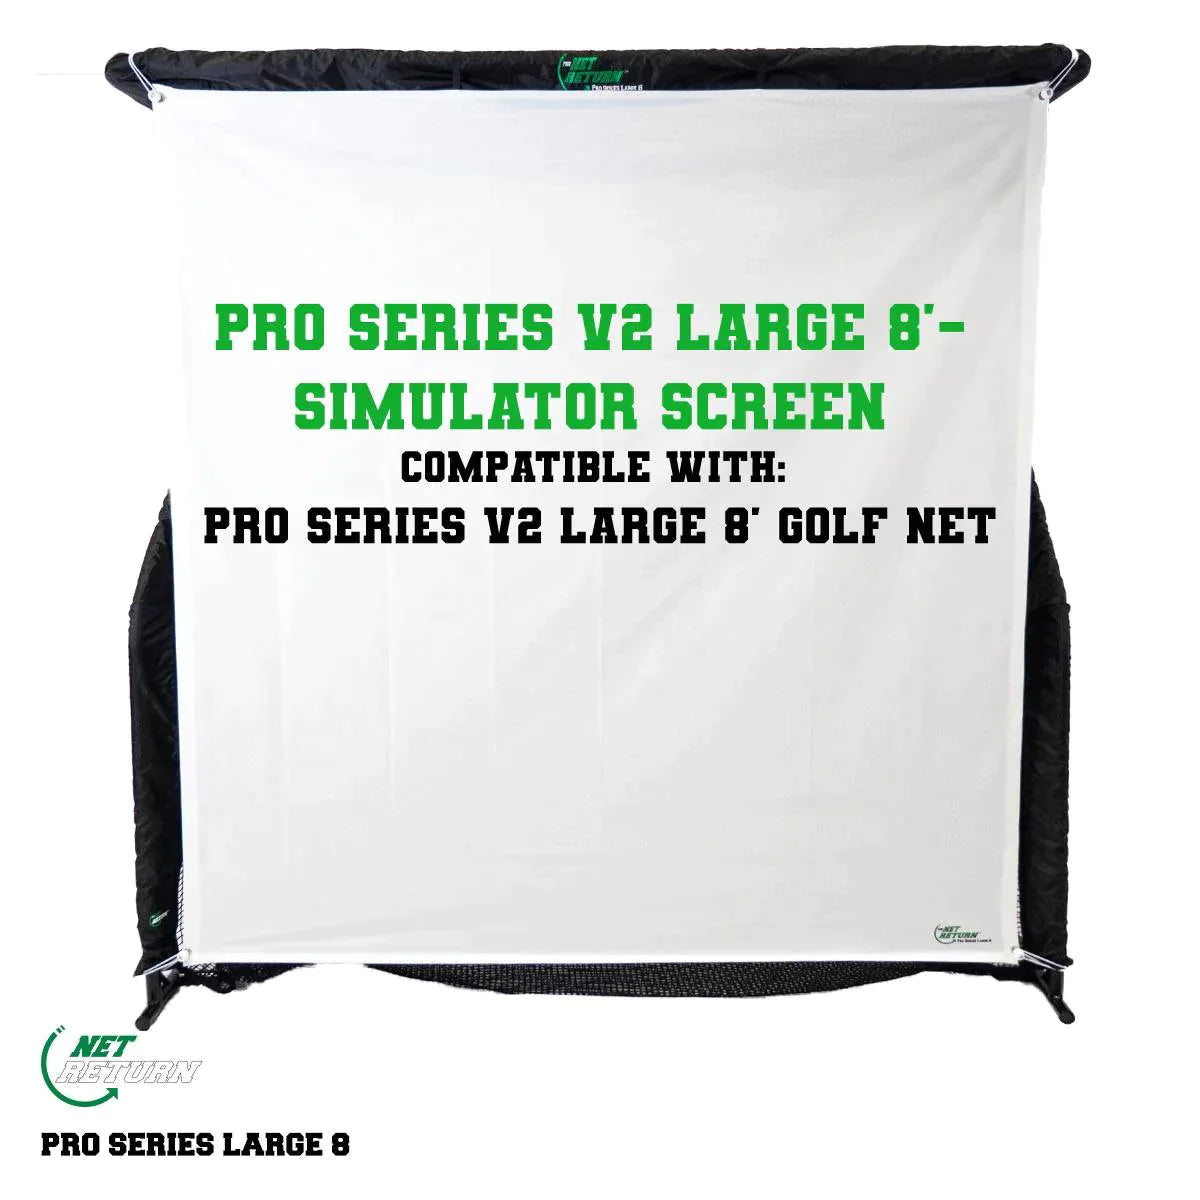 Pro Series V2 Large - Simulator Screen